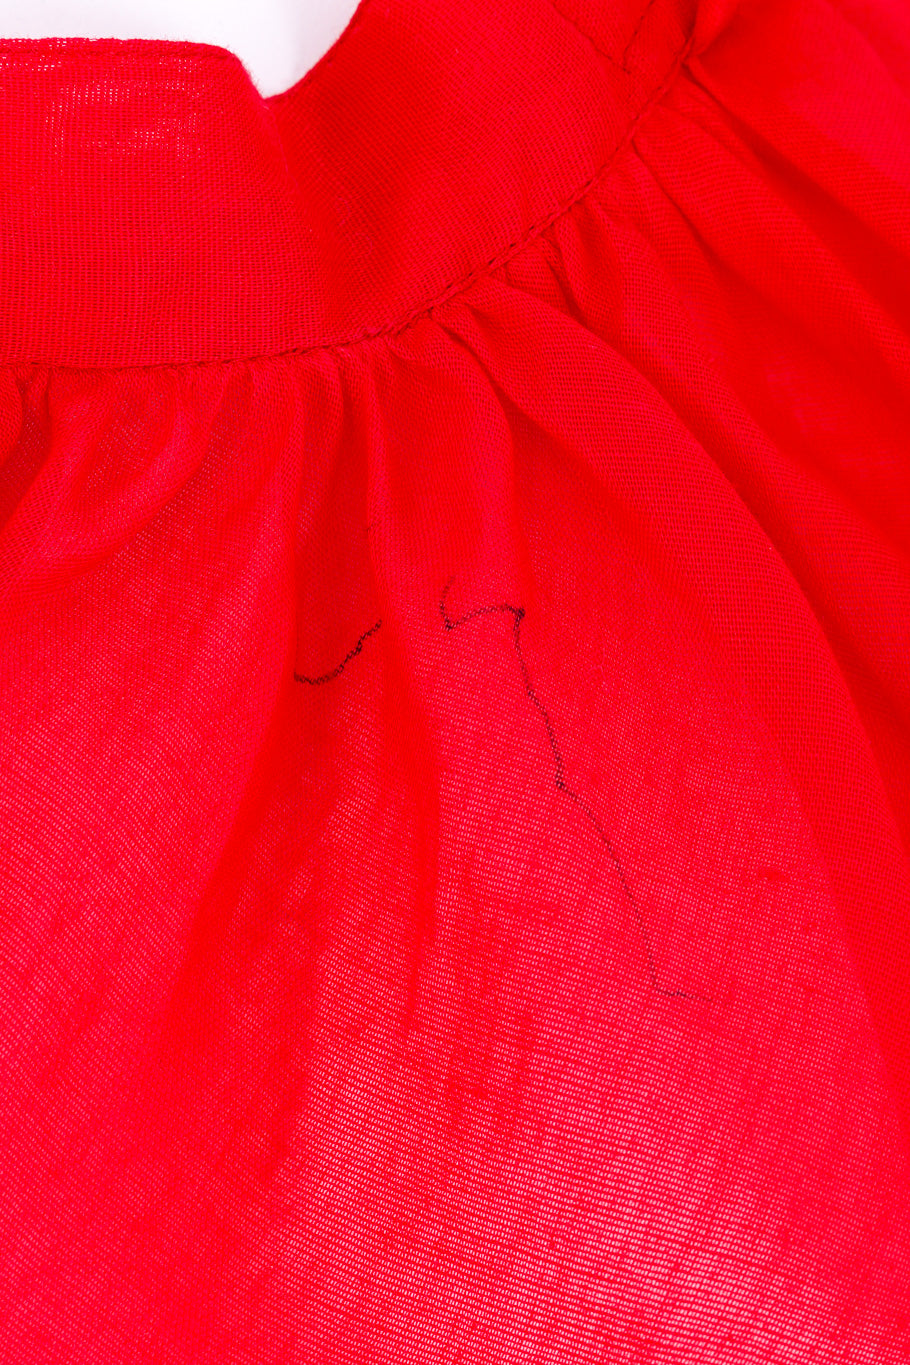 Top and skirt set by Roberta Di Camerino pen mark @recessla